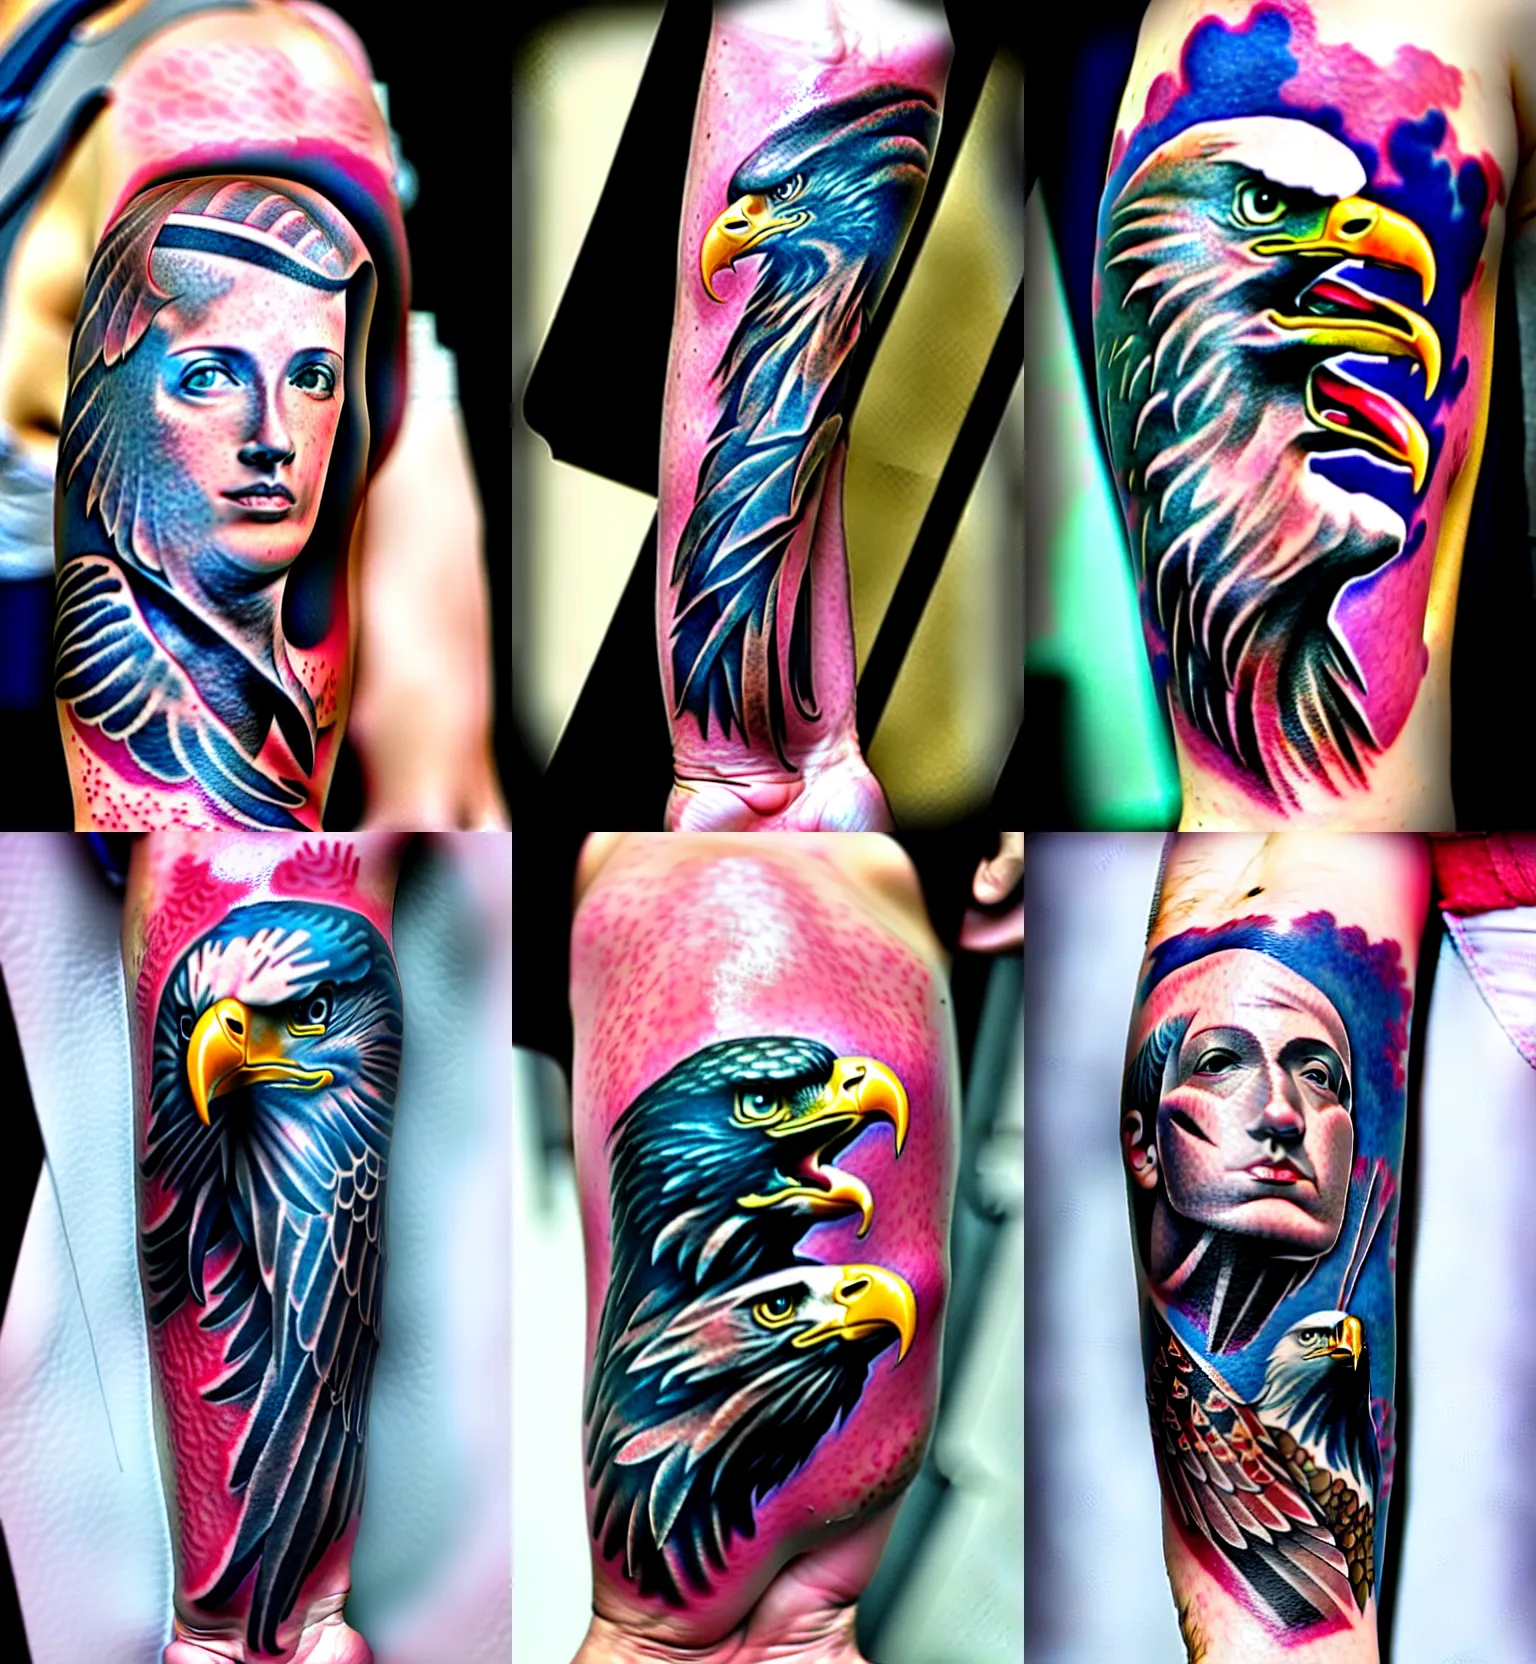 African Fish Eagle done by Sammy Lou at 57th door tattoo studio. Mychett UK  : r/tattoos